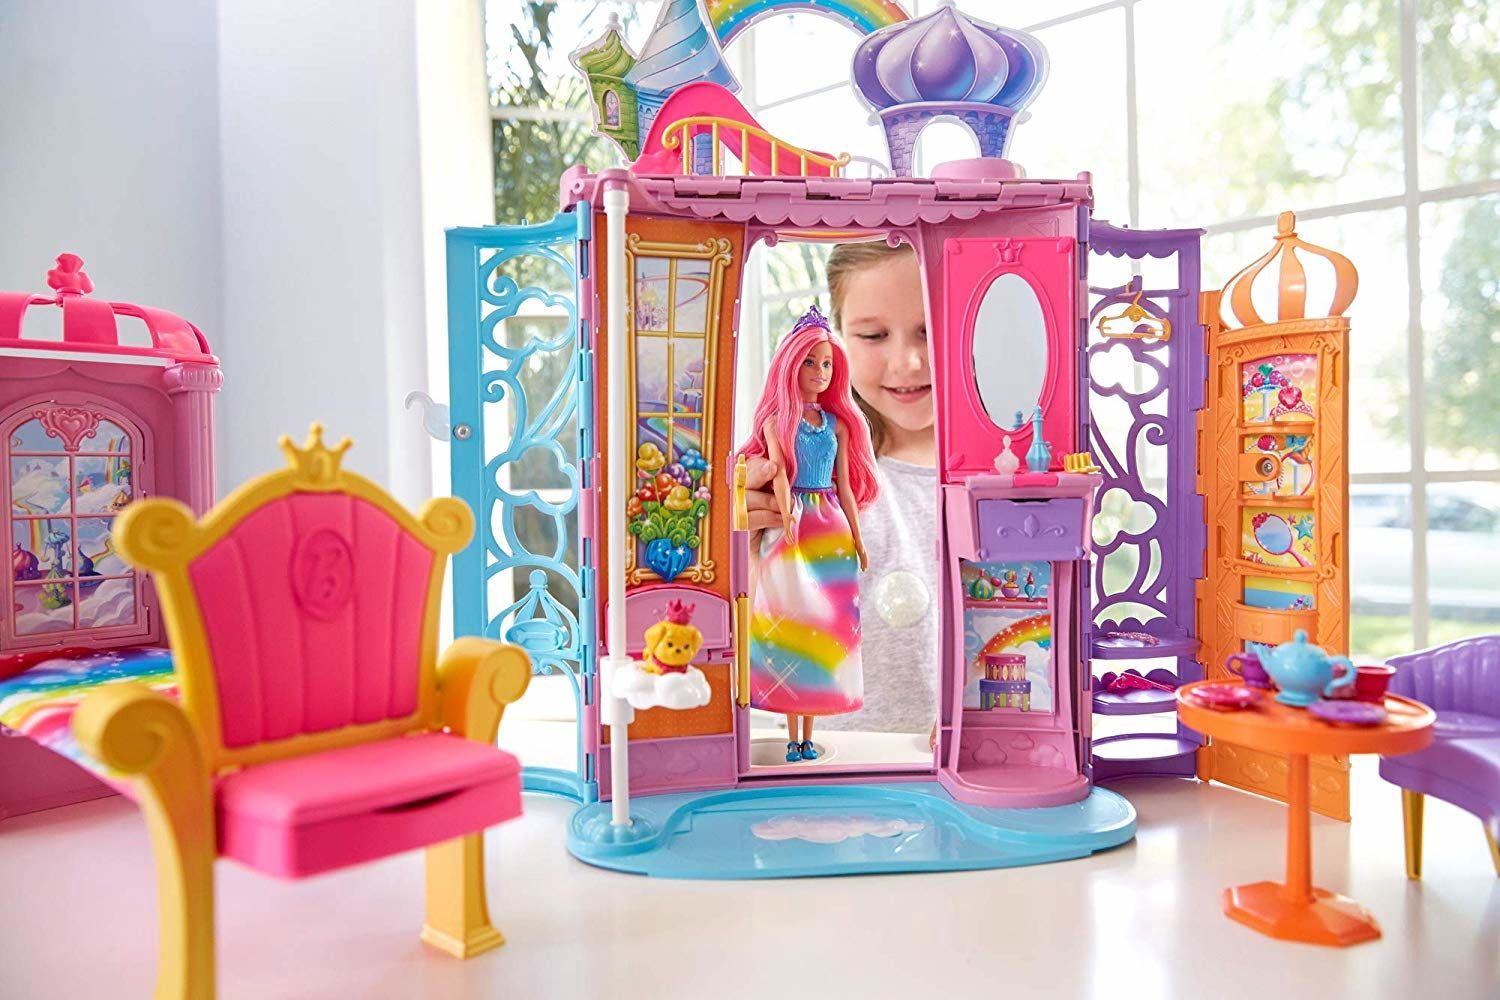 Mattel - Barbie Dreamtopia Doll and Castle Set